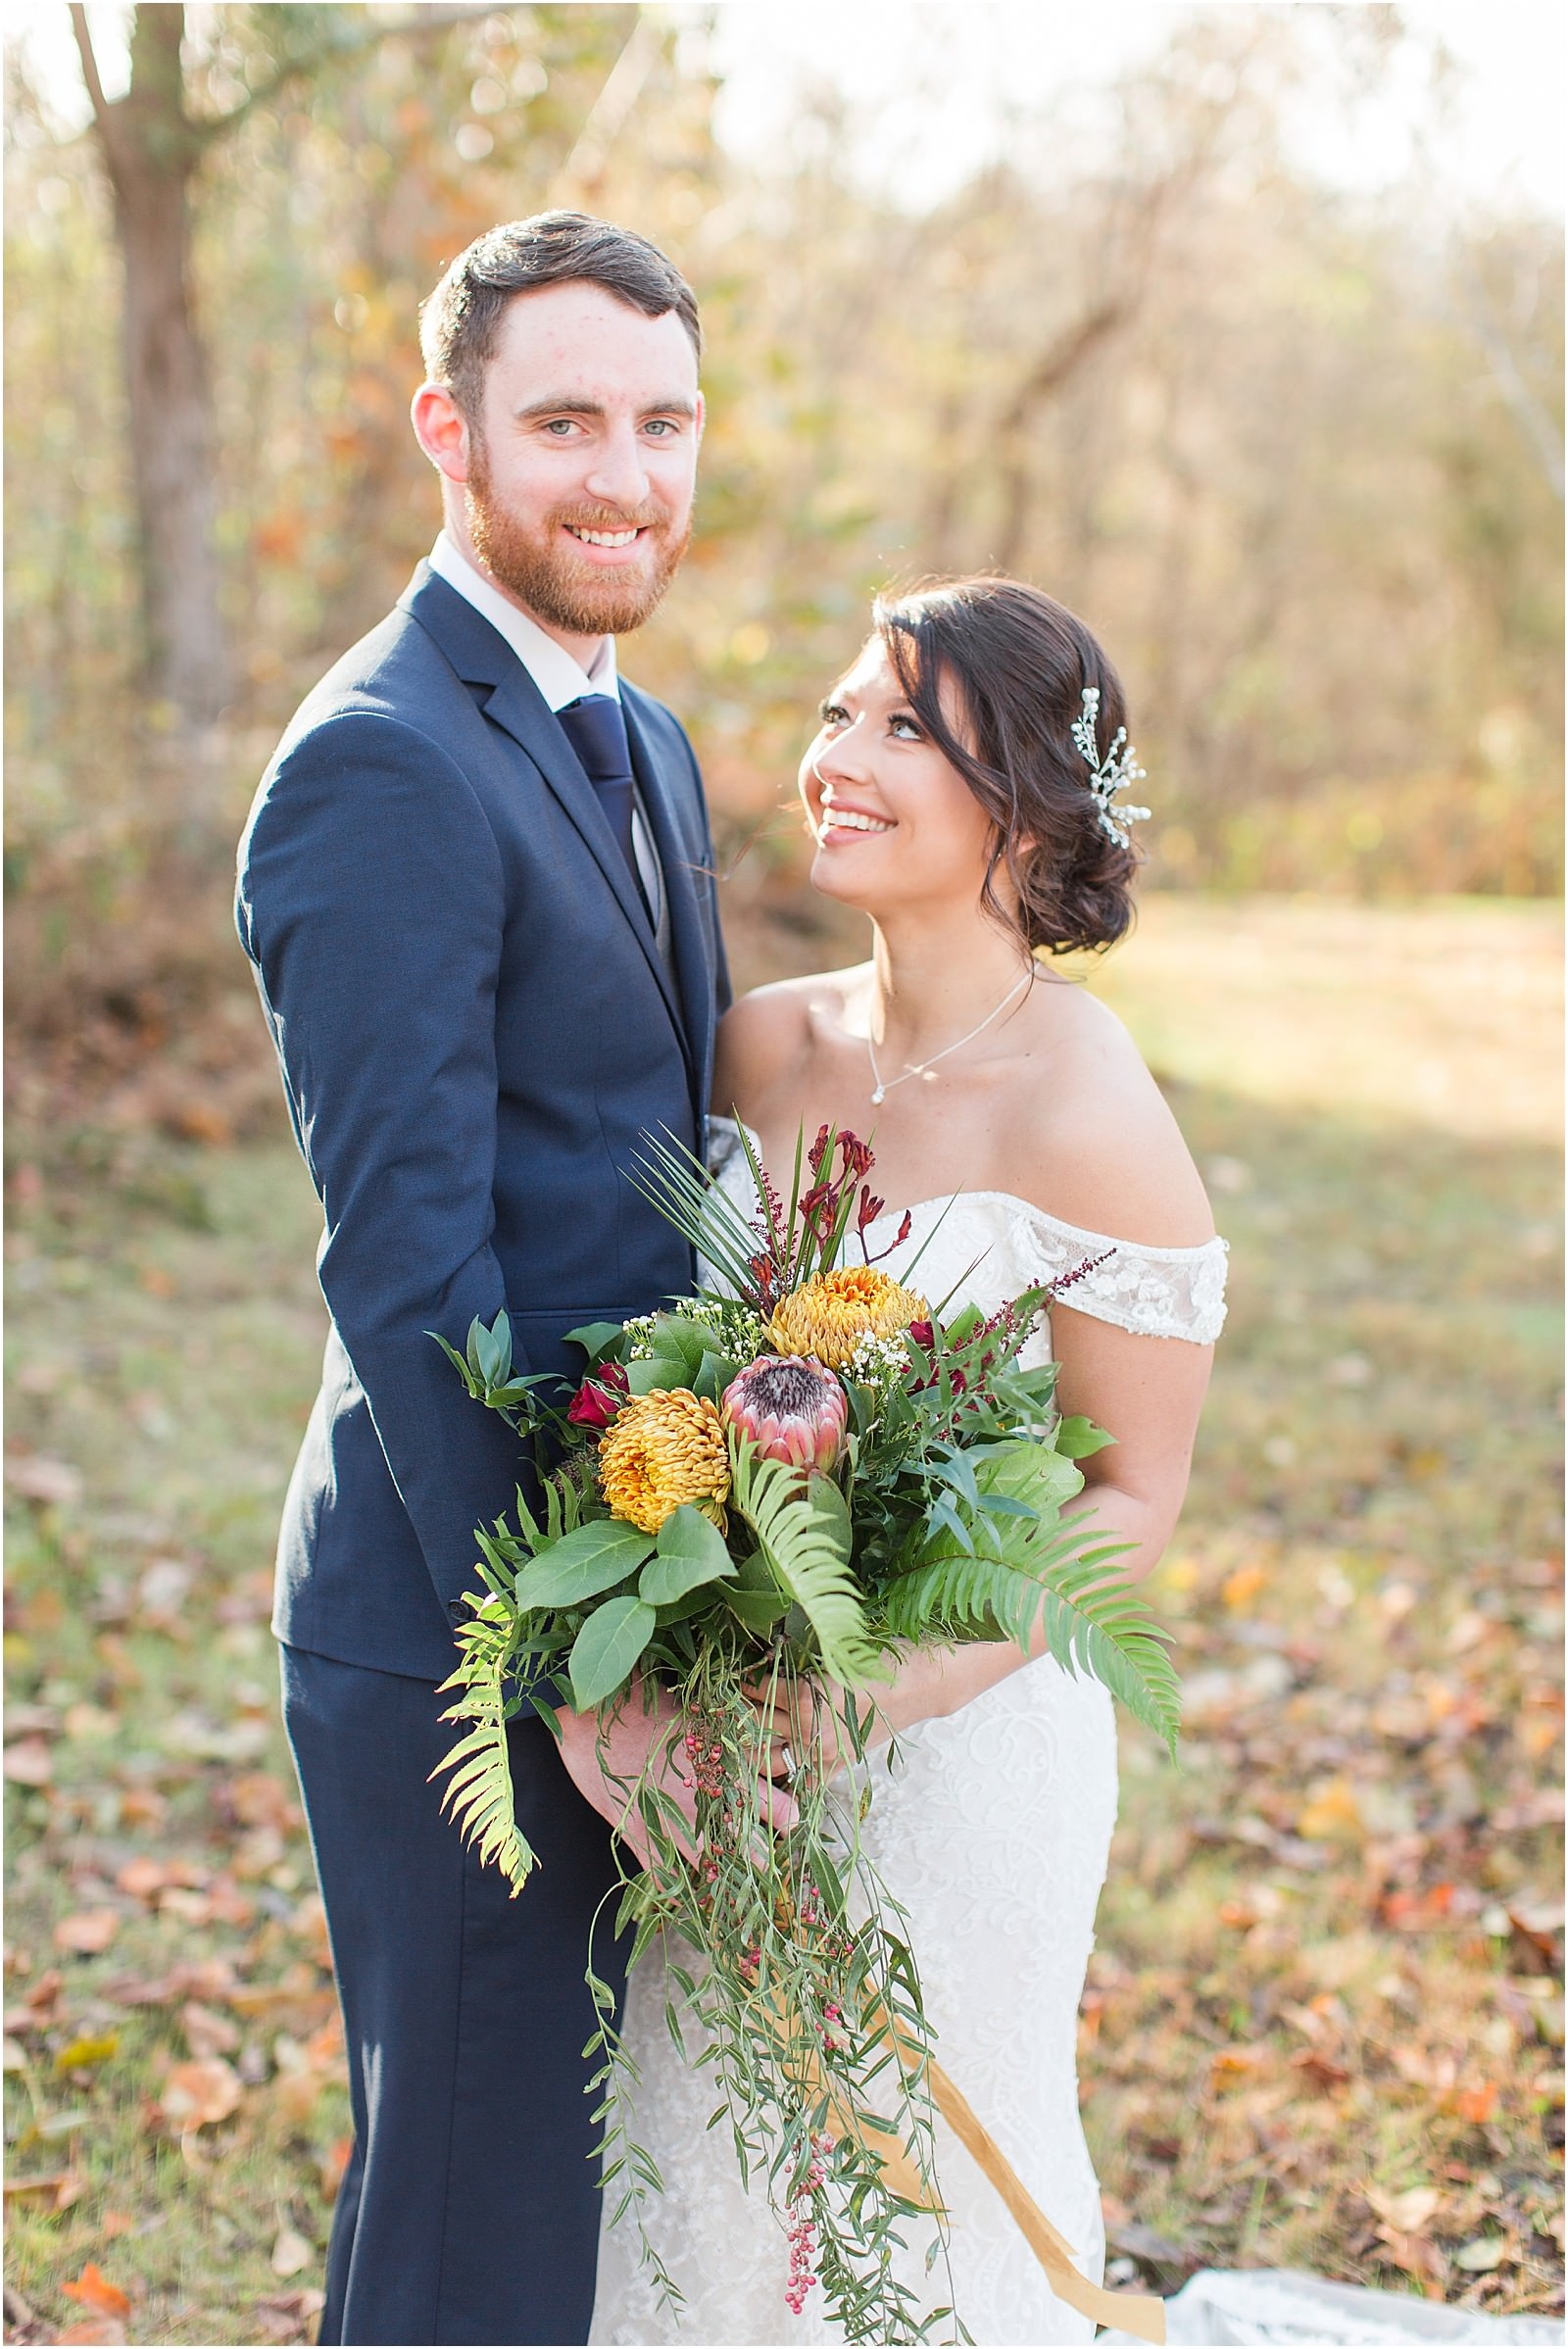 Walker and Alyssa's intimate fall wedding in Southern Indiana. | Wedding Photography | The Corner House Wedding | Southern Indiana Wedding | #fallwedding #intimatewedding | 038.jpg